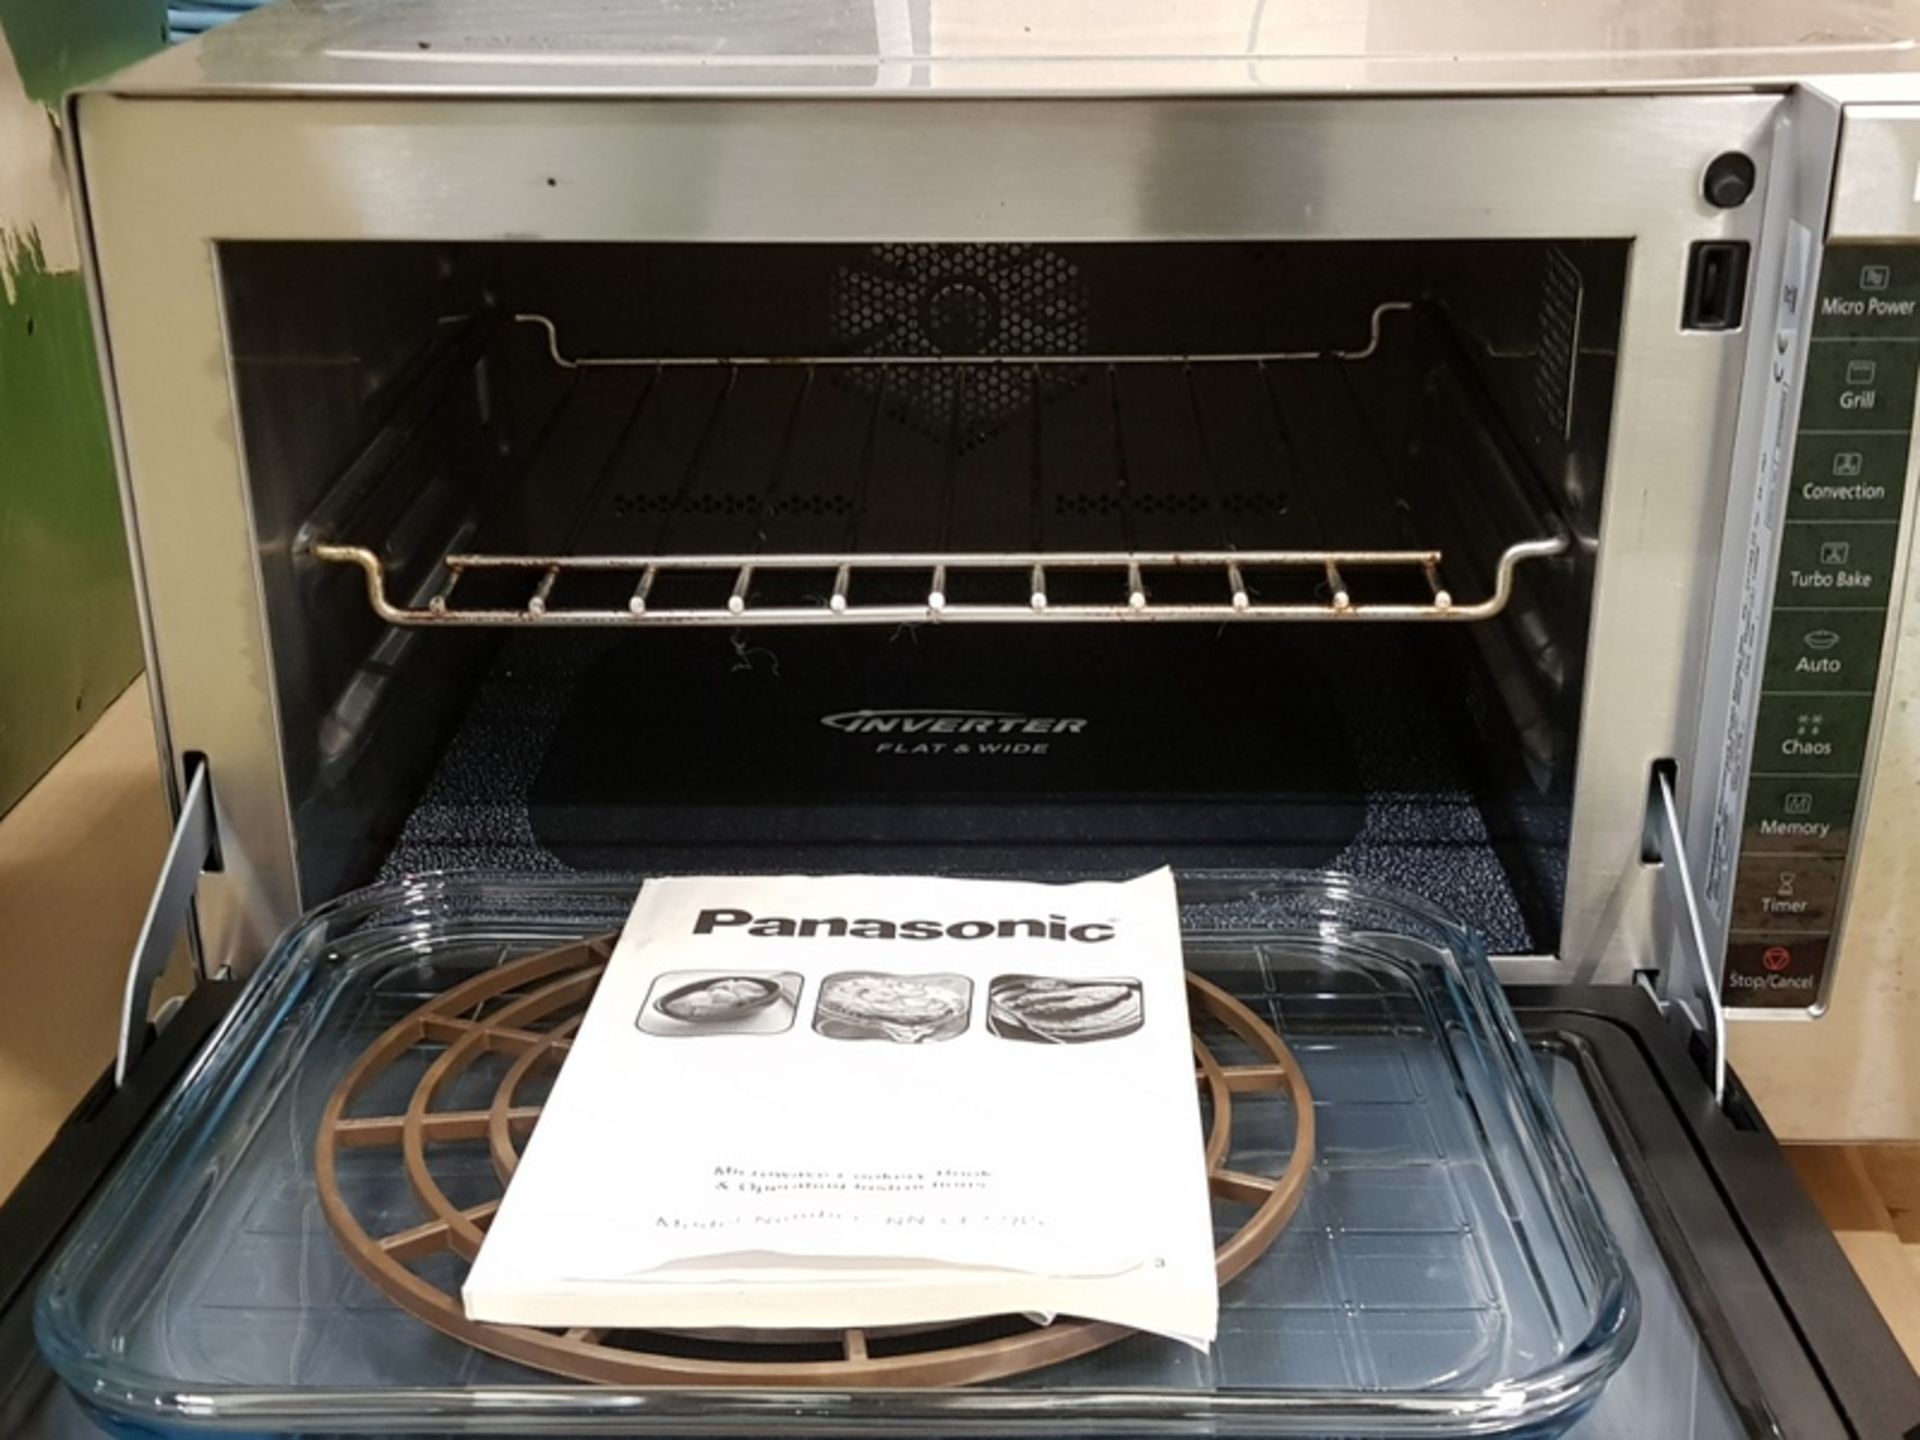 Panasonic Inverter Microwave Oven - Image 3 of 5